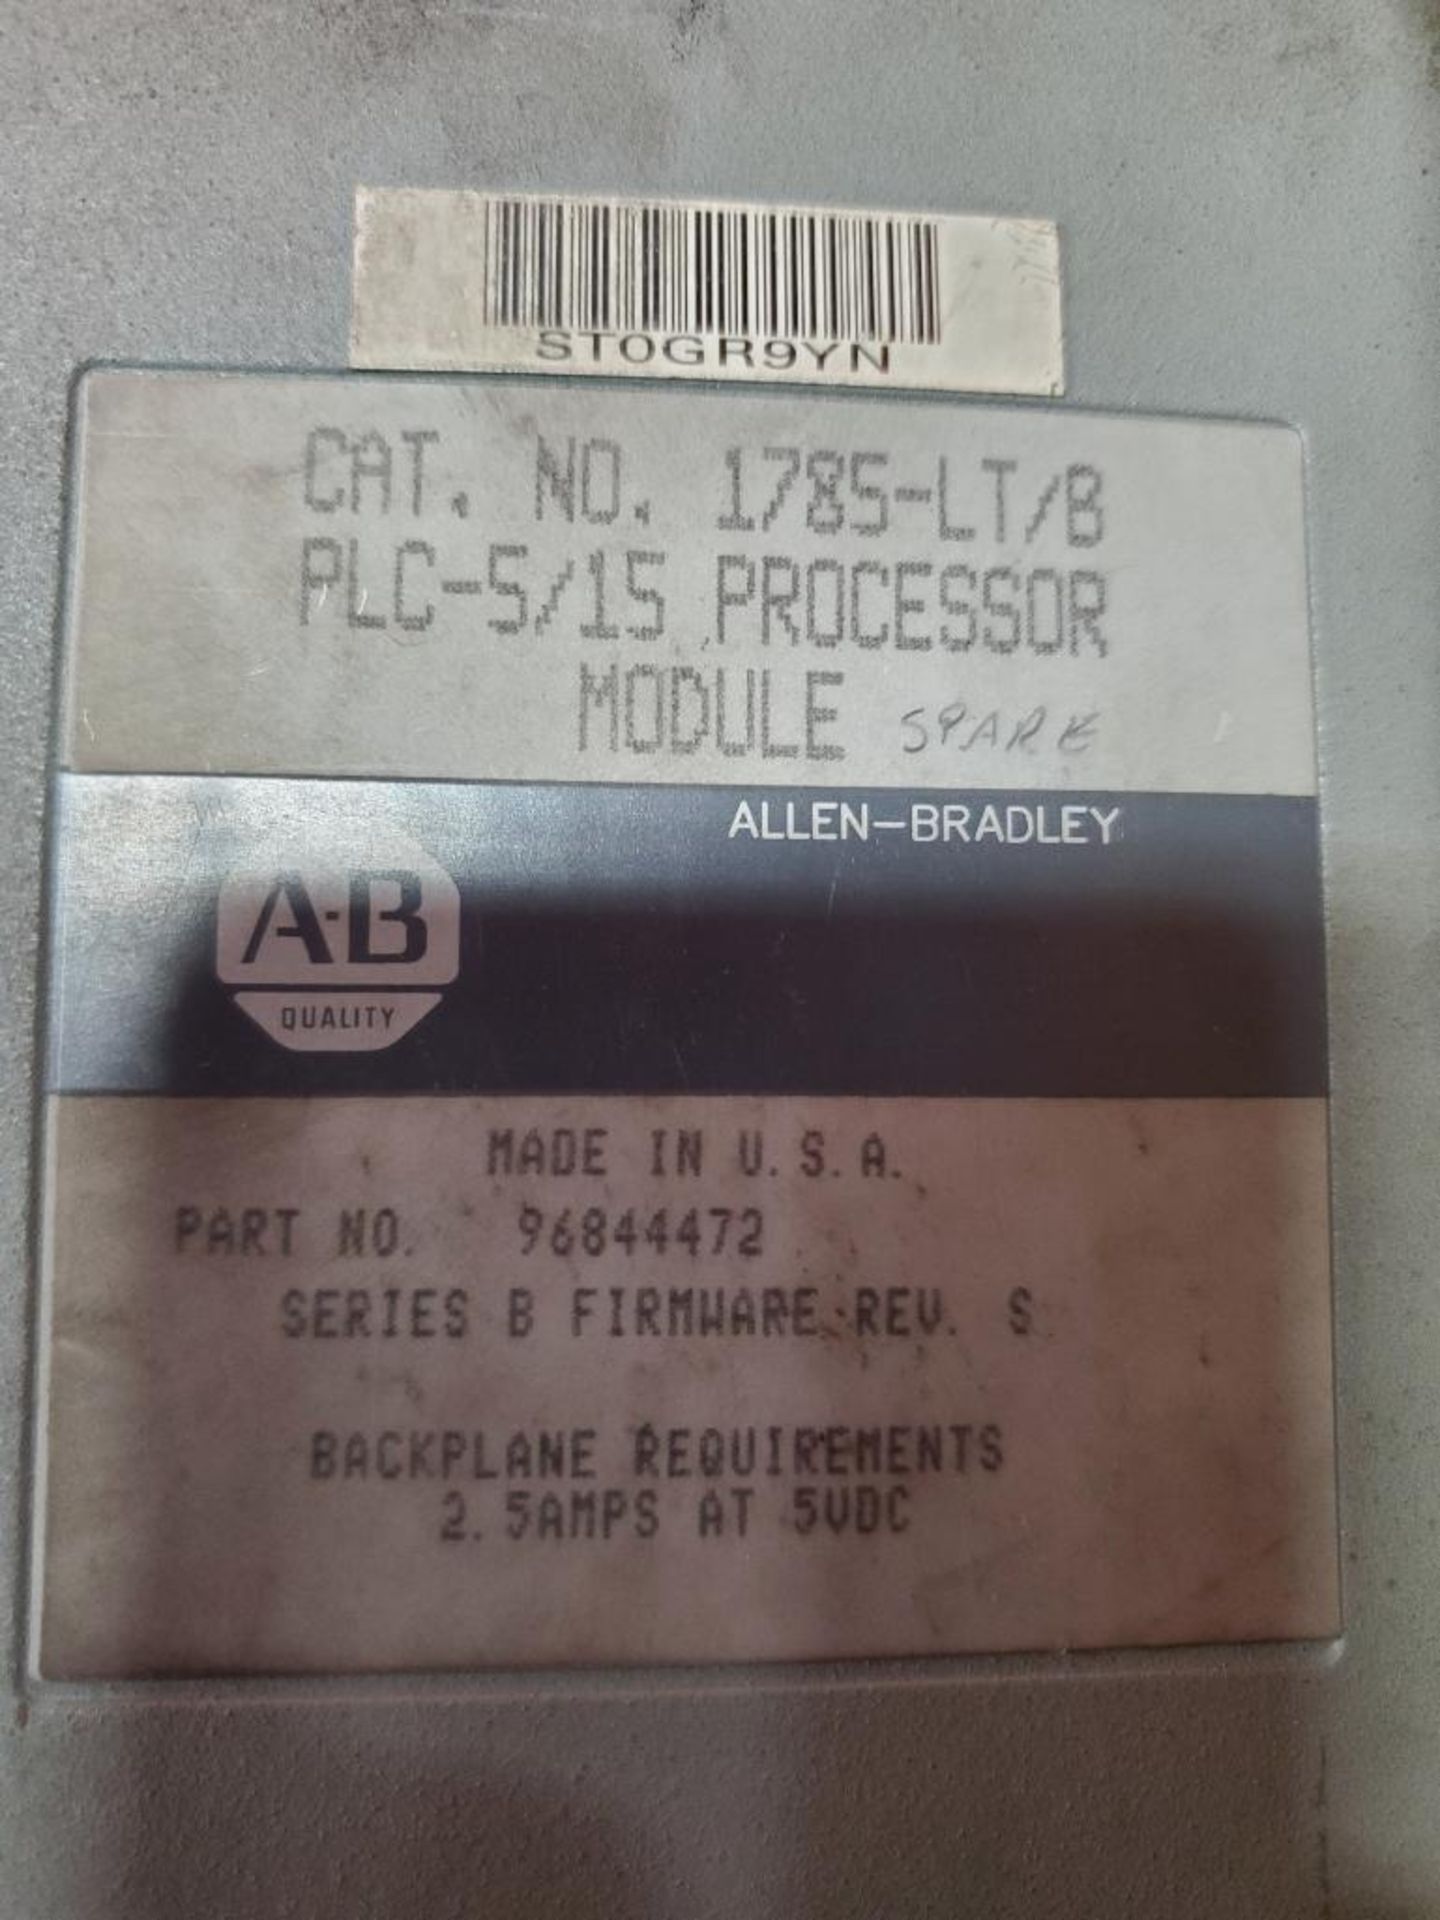 Allen Bradley 1785-LT/B PLC-5/15 Processor Module. - Image 5 of 5